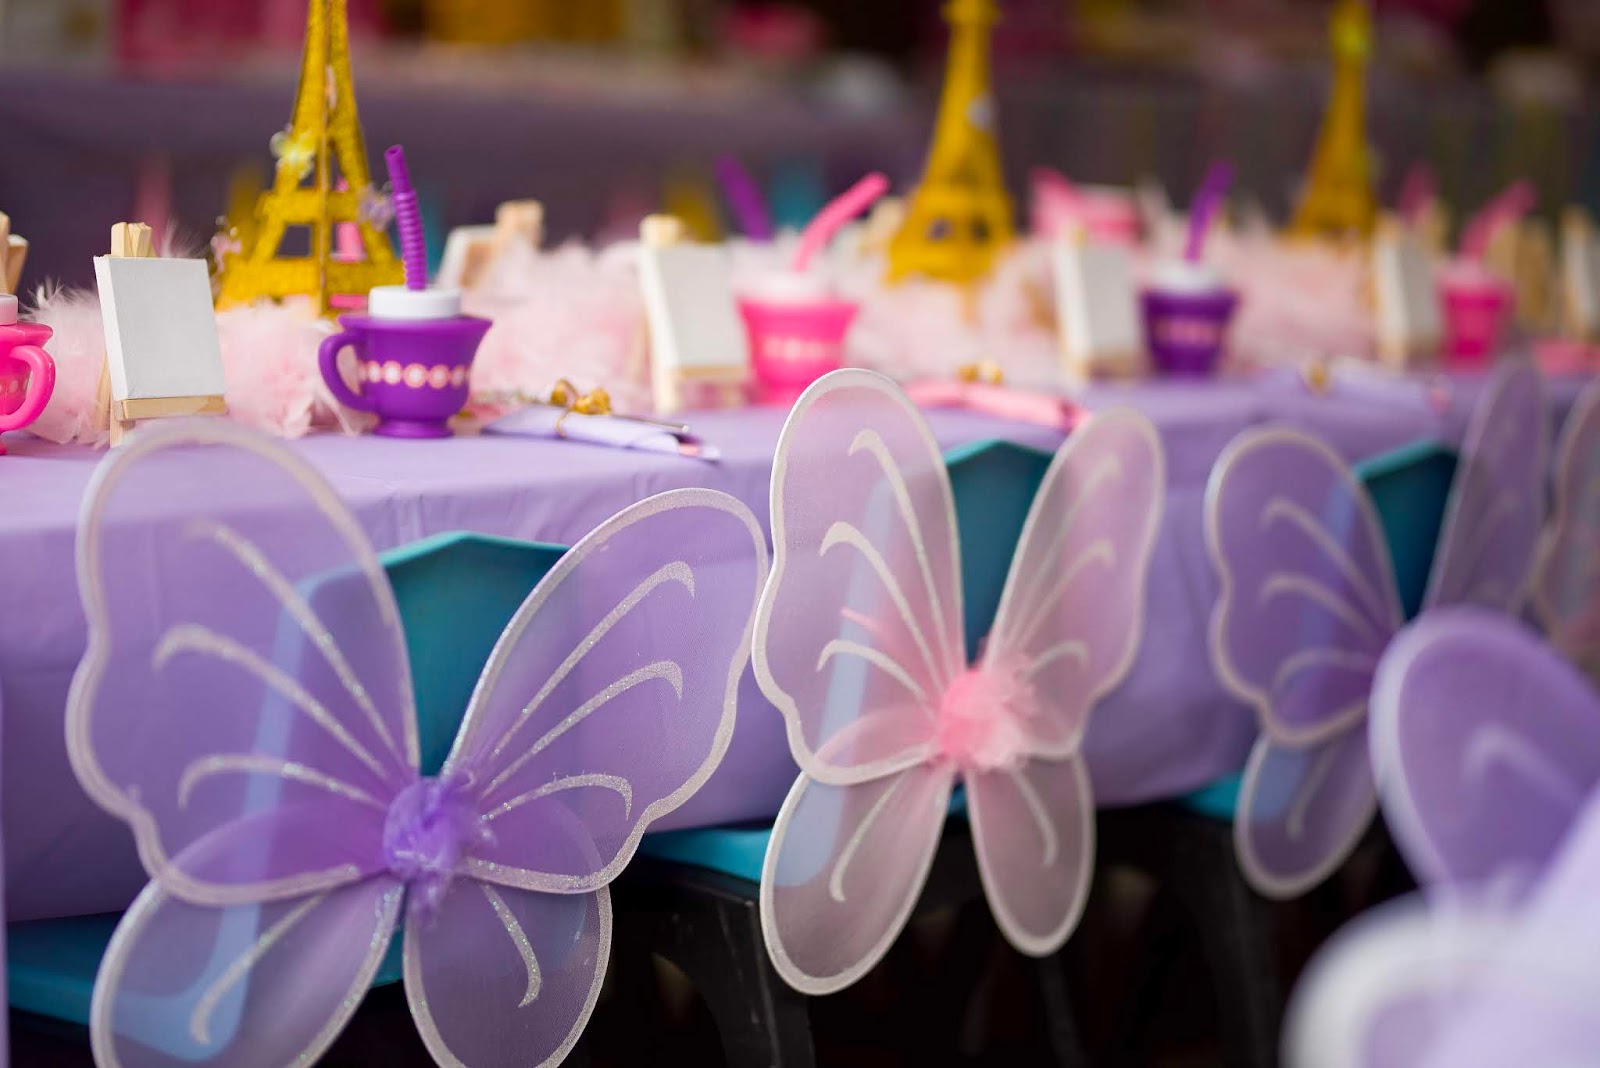 Madeline's Fancy Nancy, Paris, Butterfly Themed 4th Birthday Party - Something Delightful Blog #partyplanning #kidsbirthdayparty #birthdaypartyideas #parisparty #butterflyparty #fancynancy #fancynancyparty #fourthbirthdayideas